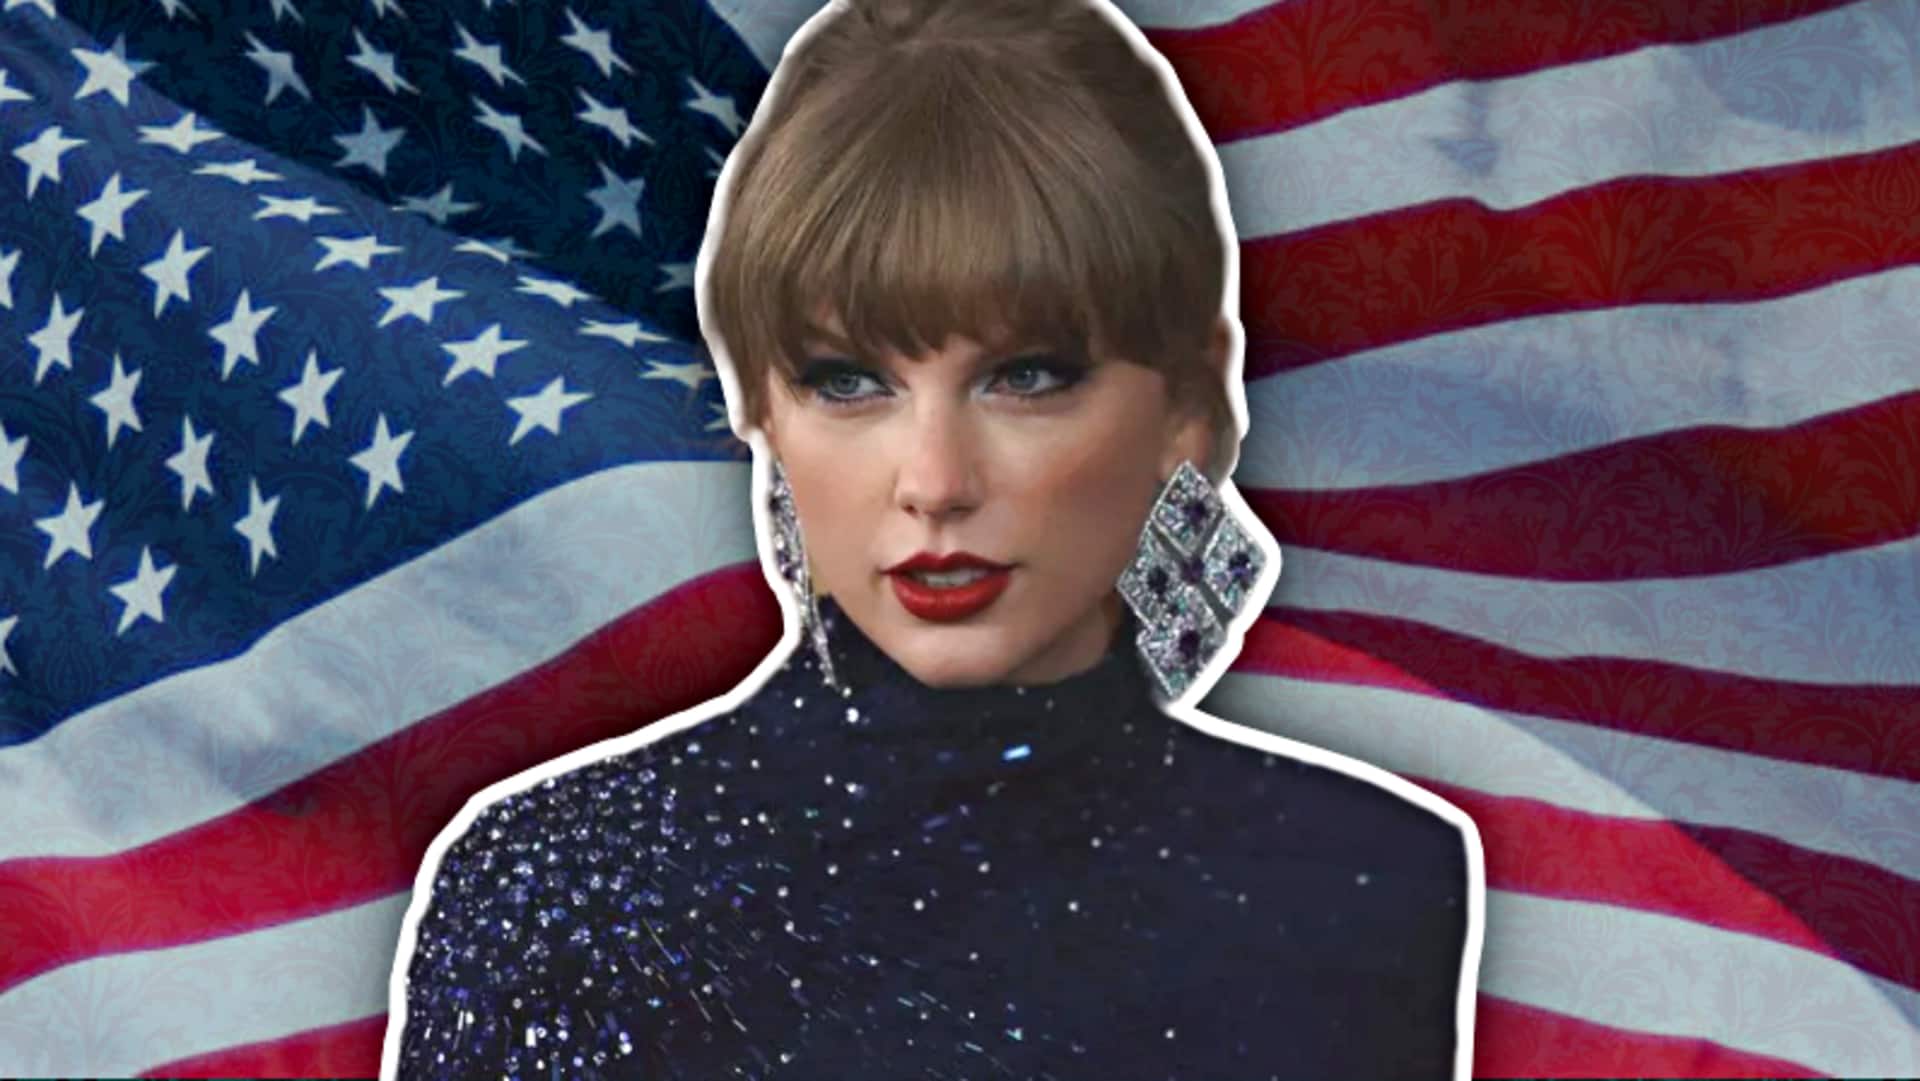 X blocks 'Taylor Swift' searches as deepfakes raise concerns